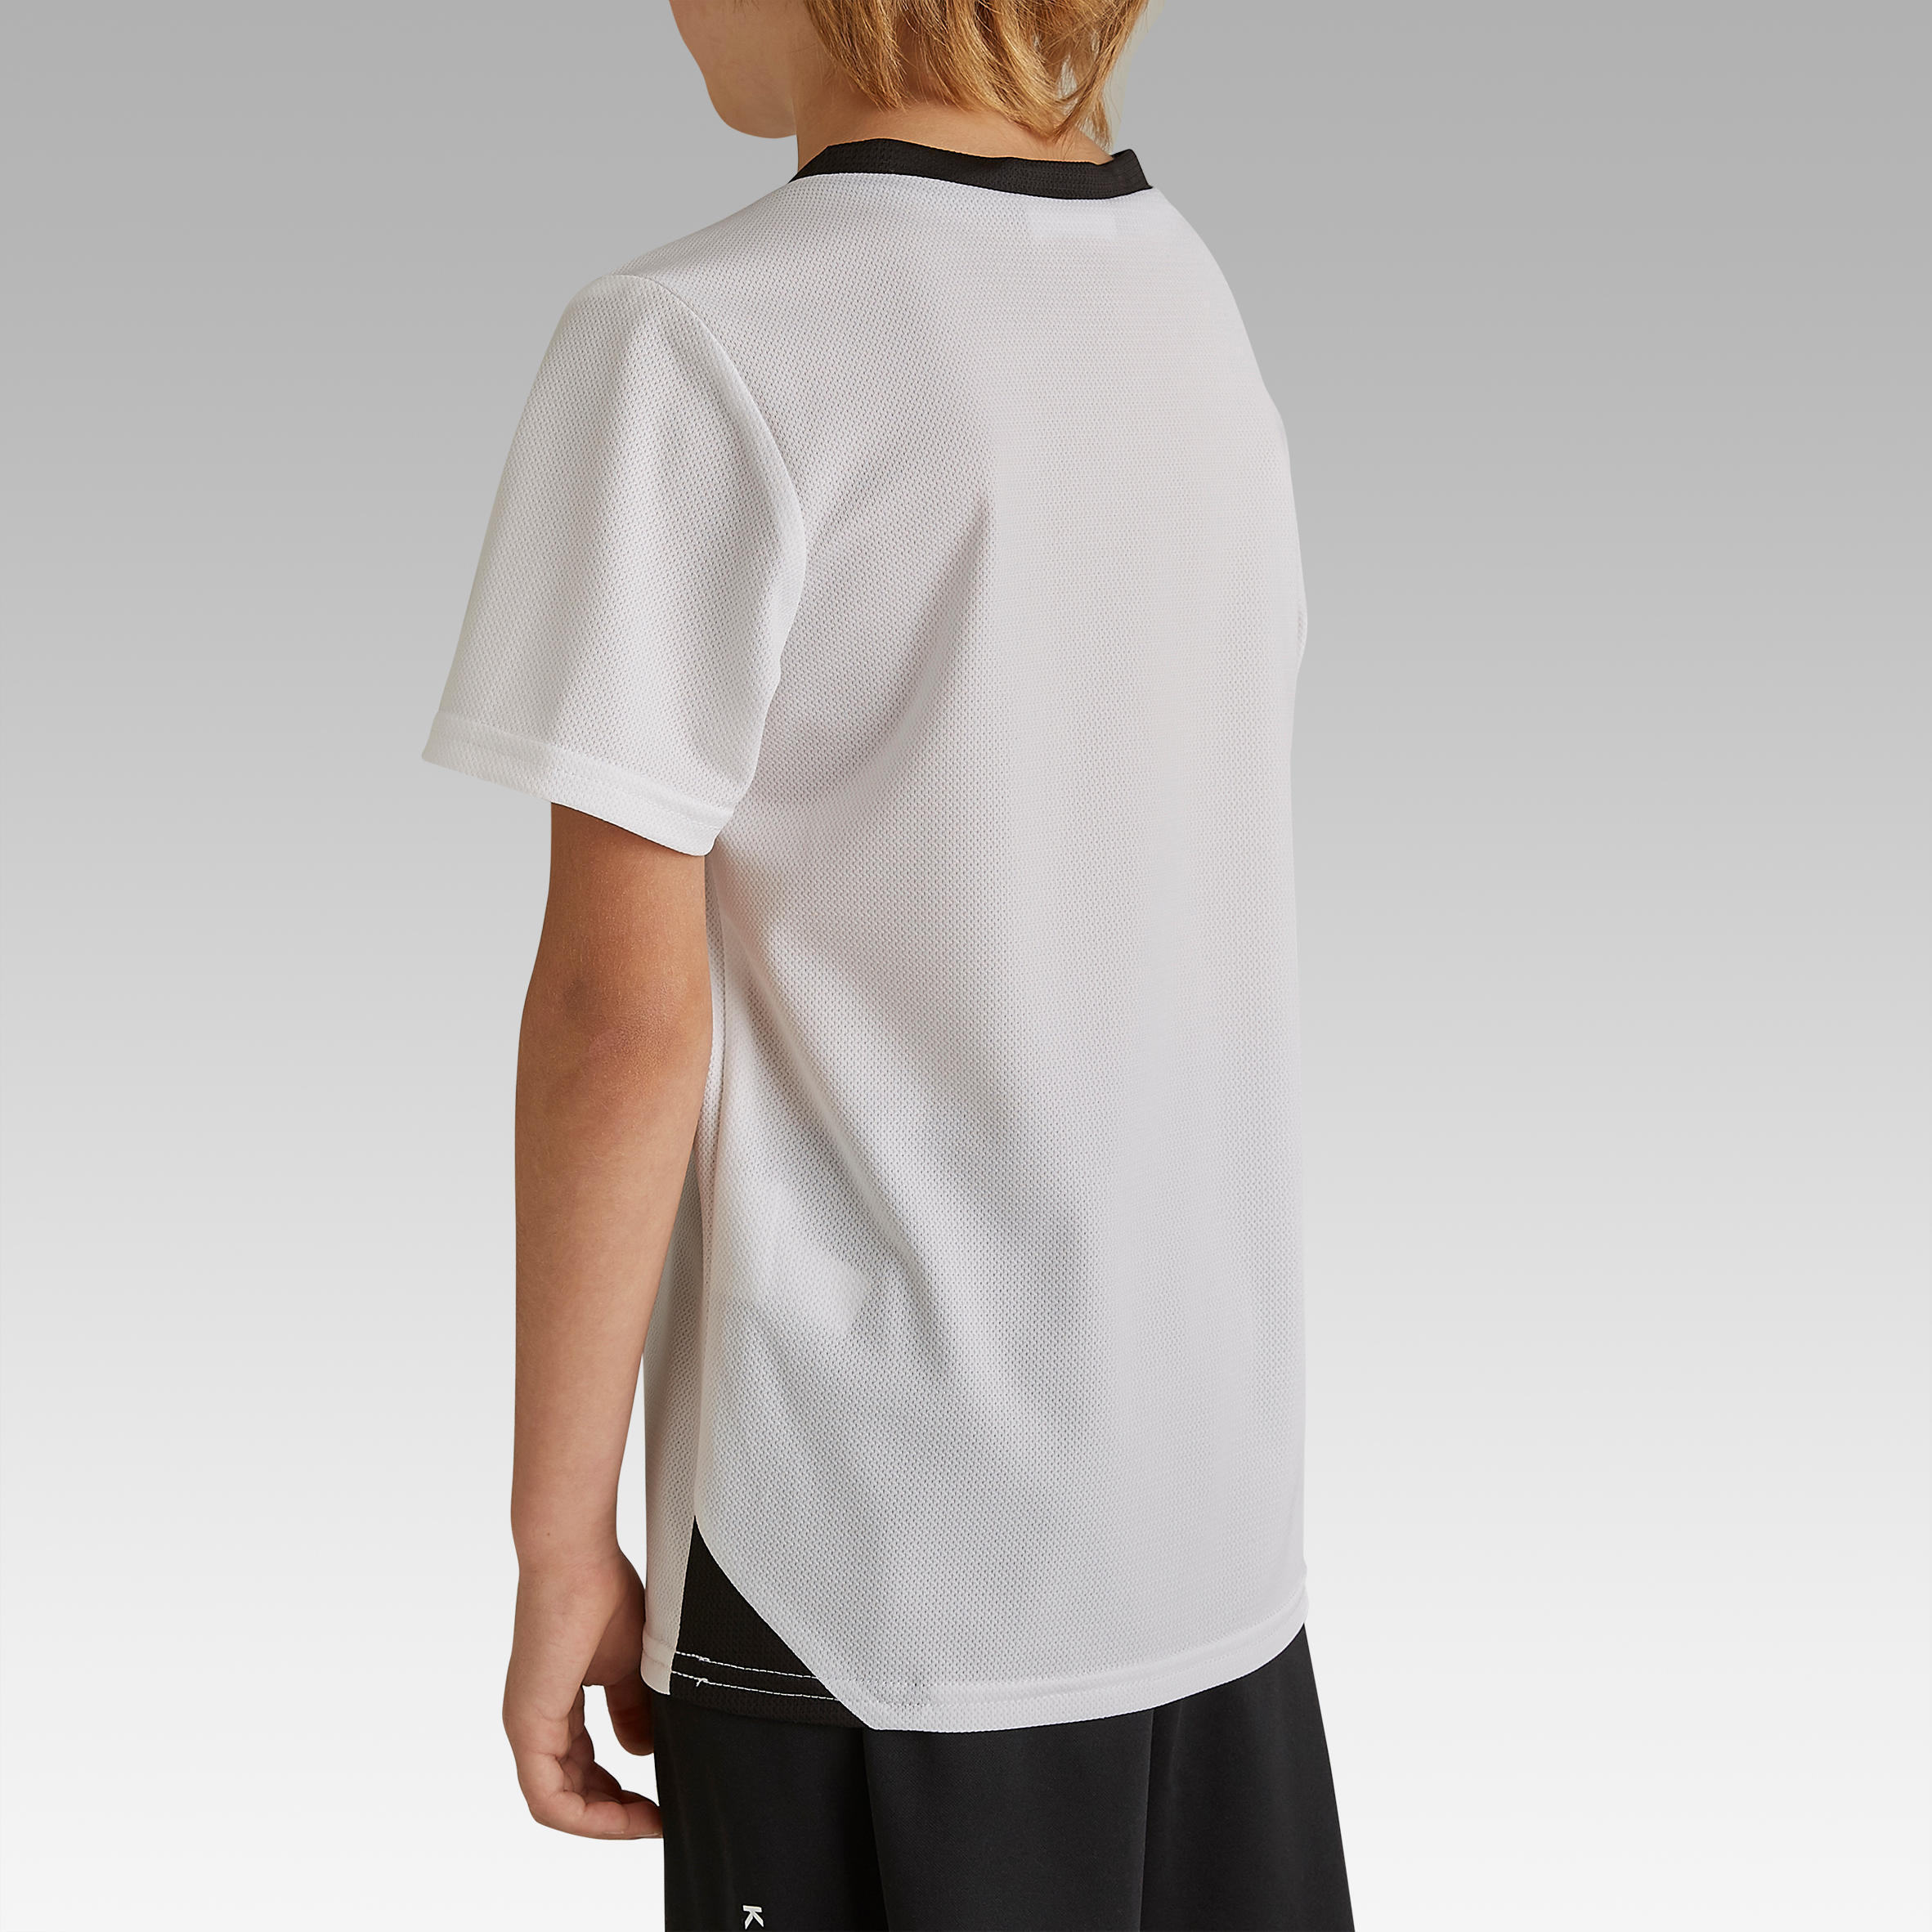 Refurbished Kids Football Shirt Essential - A Grade 6/7